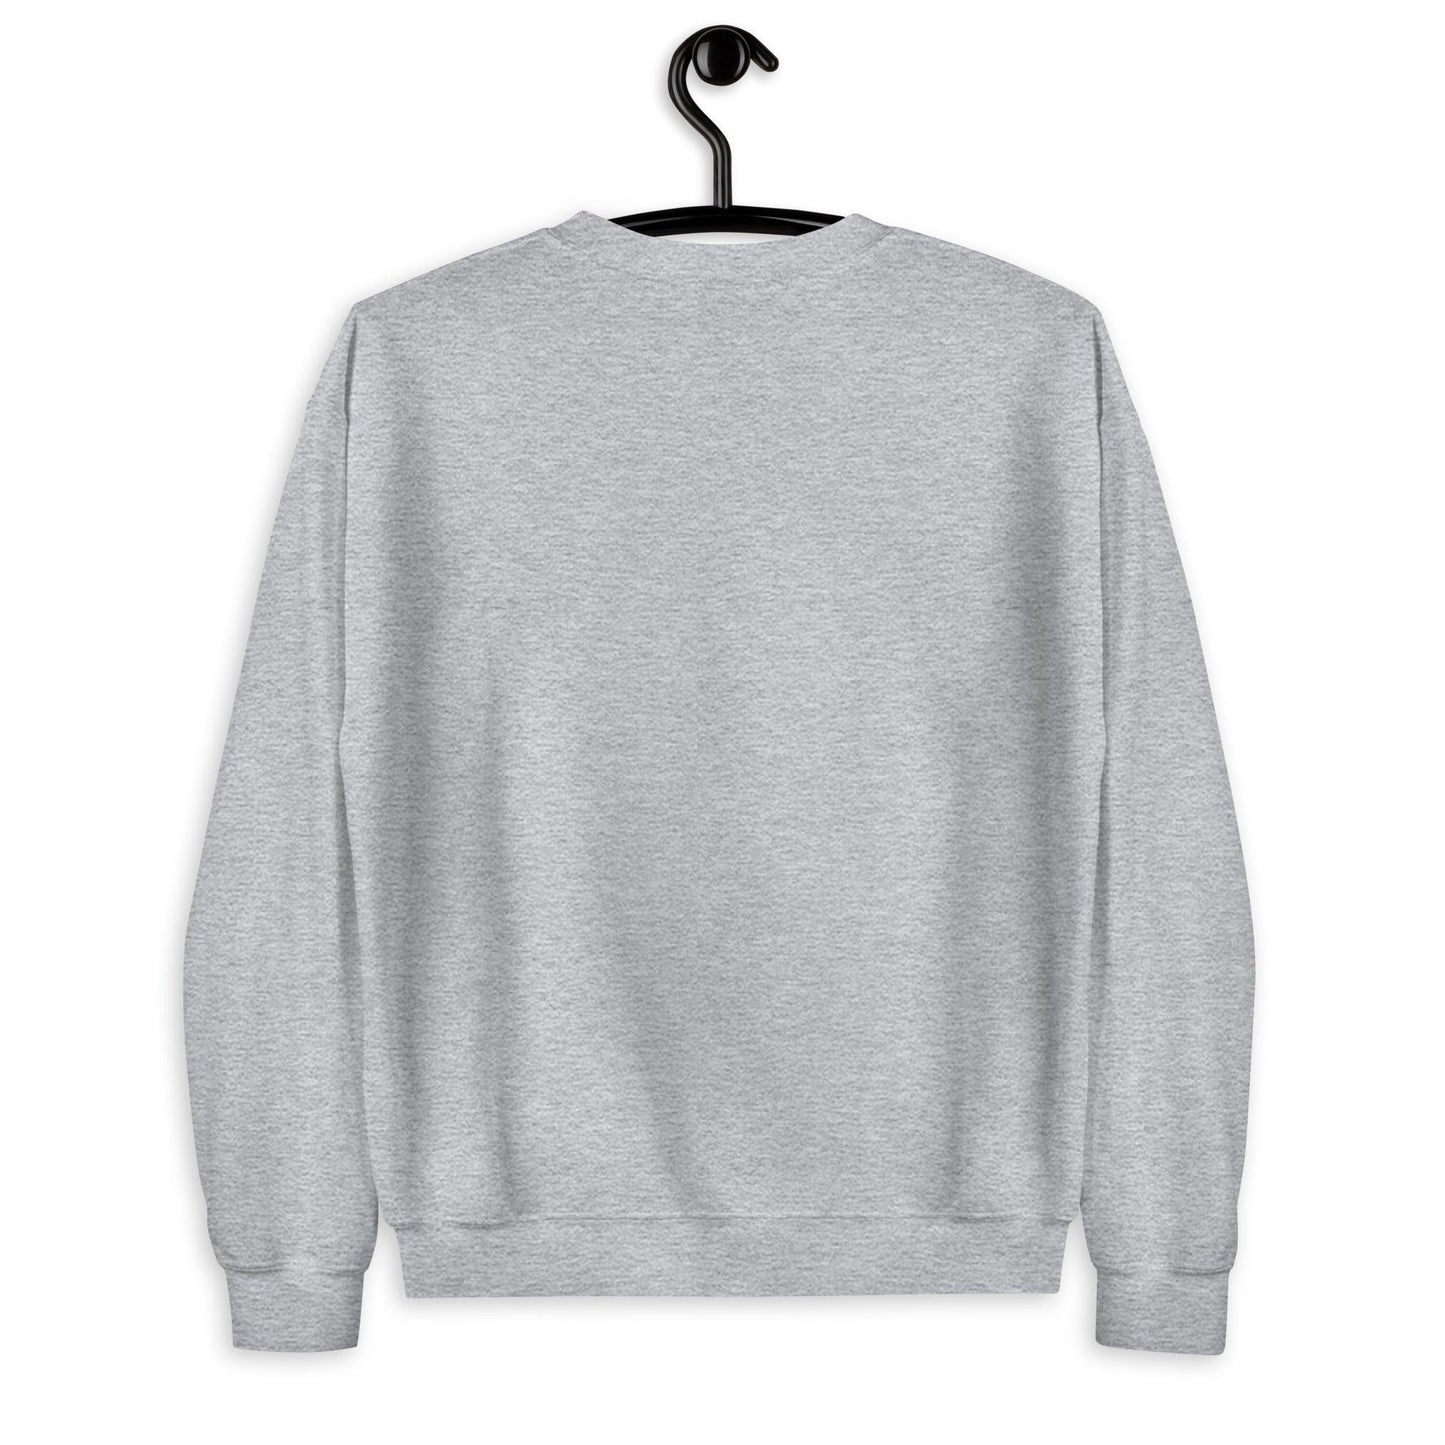 "URise Together" Embroidered Sweatshirt - Grey - URiseTogetherApparel